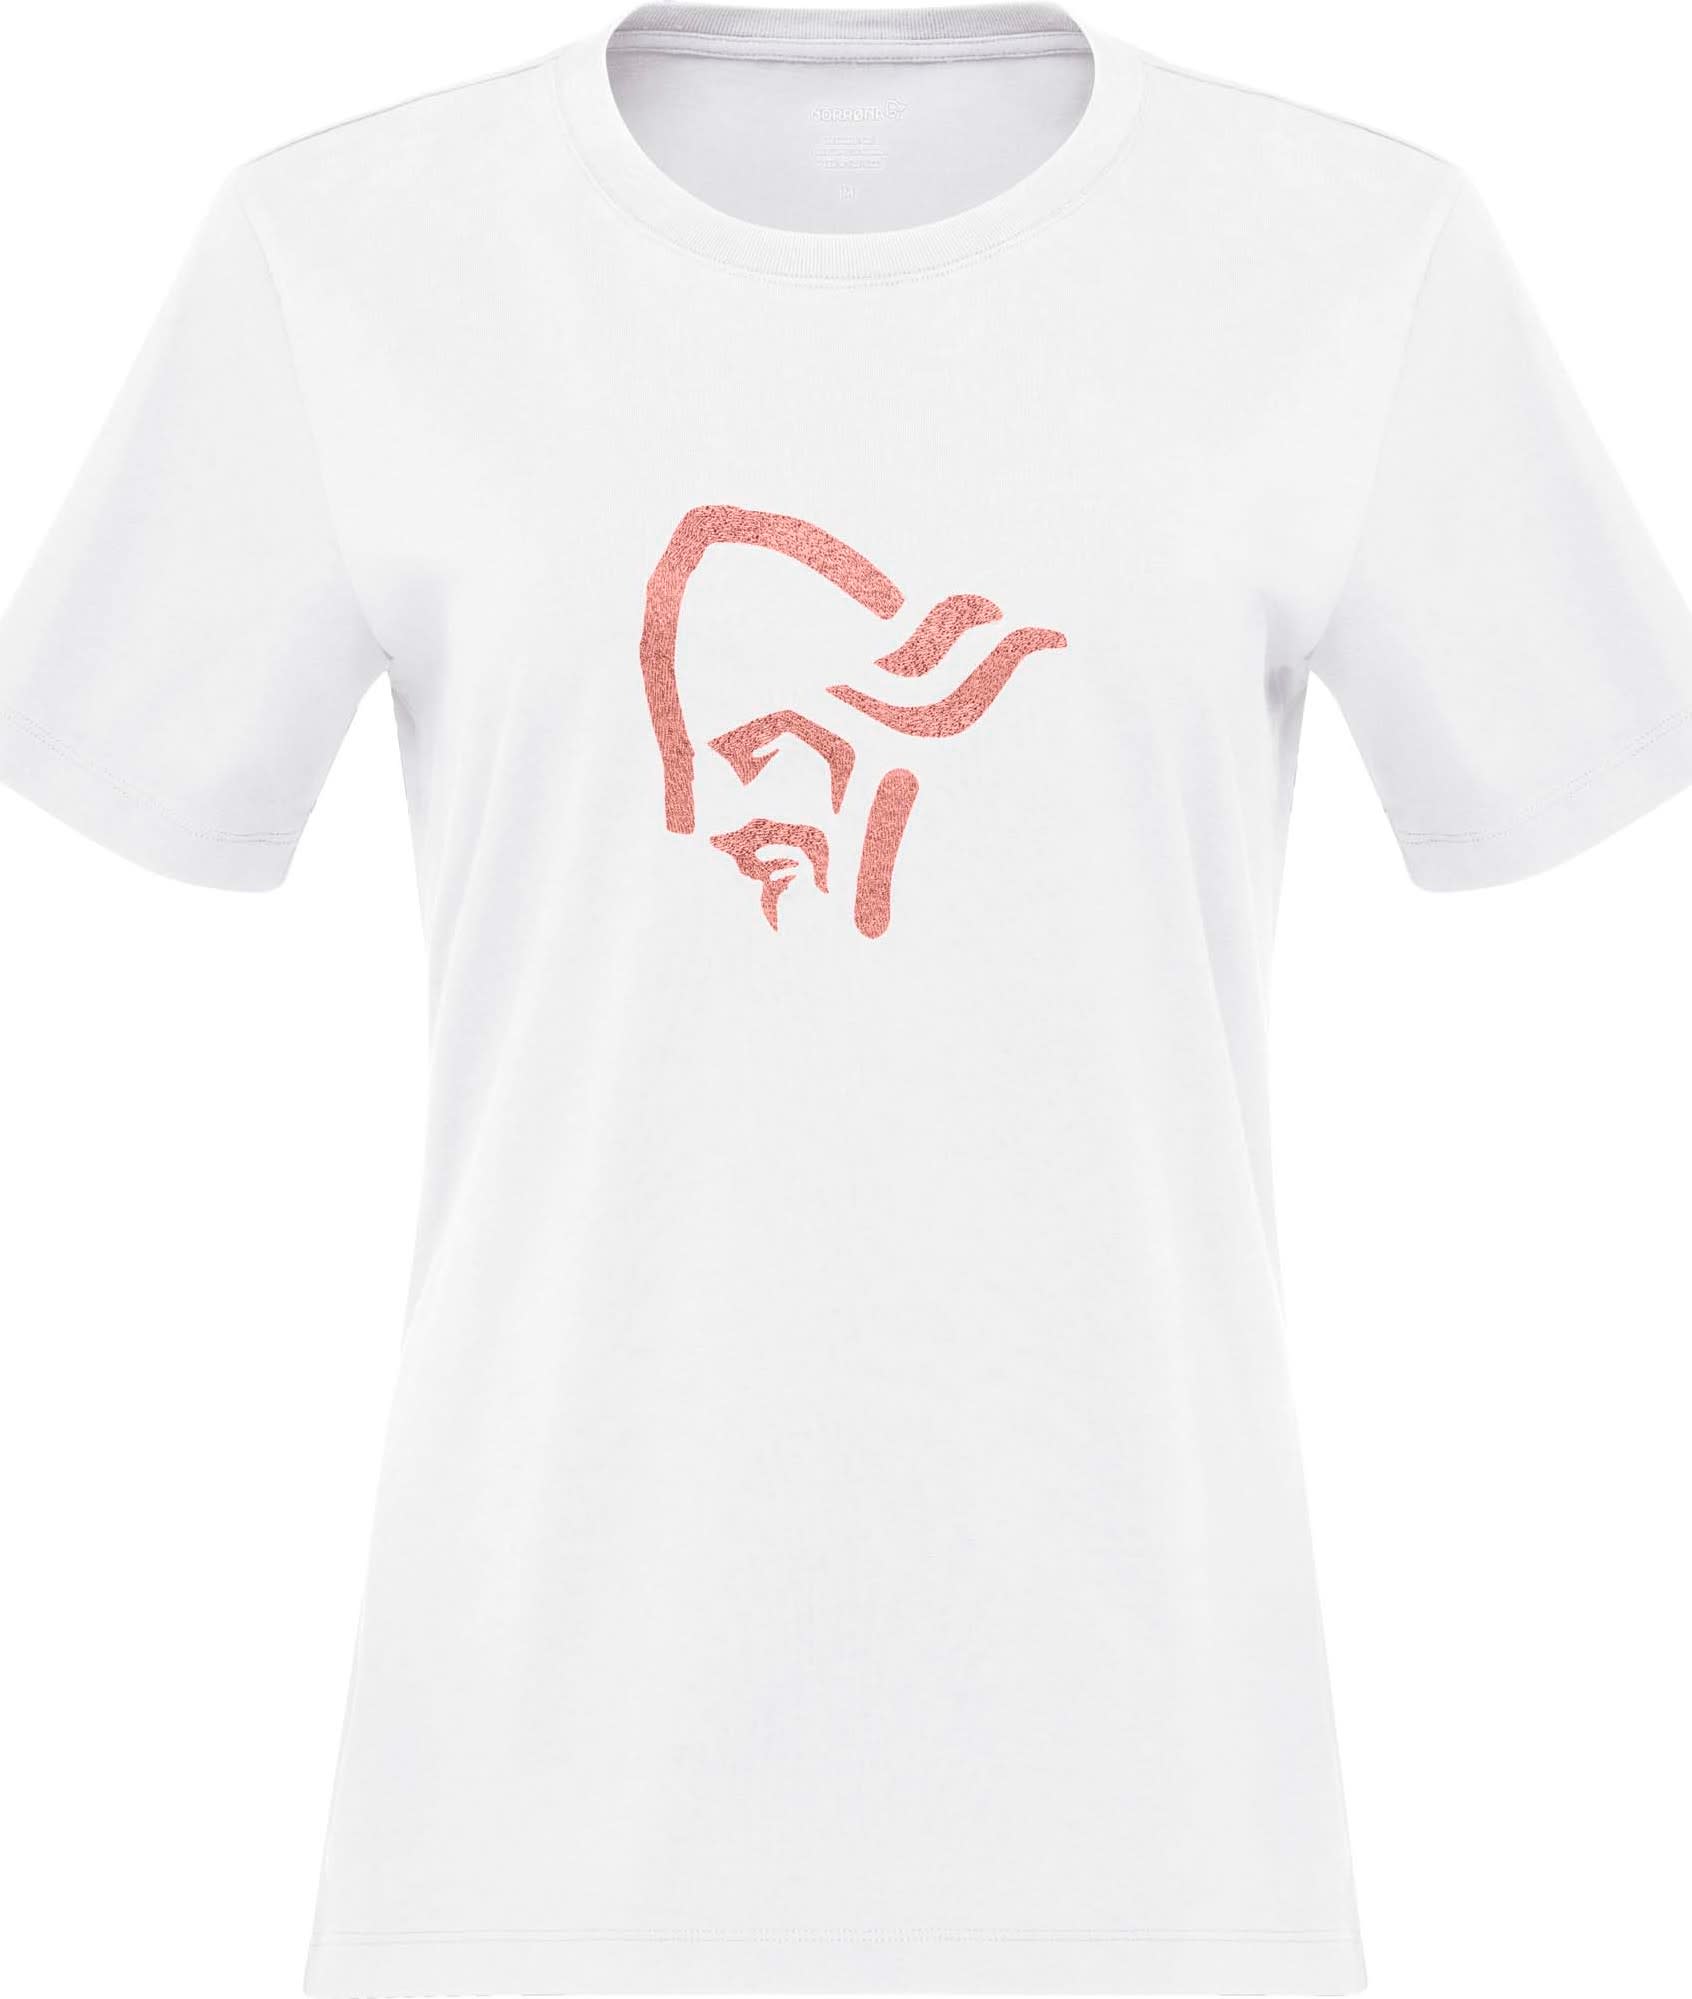 Women’s /29 Cotton Material Viking T-Shirt Pure White